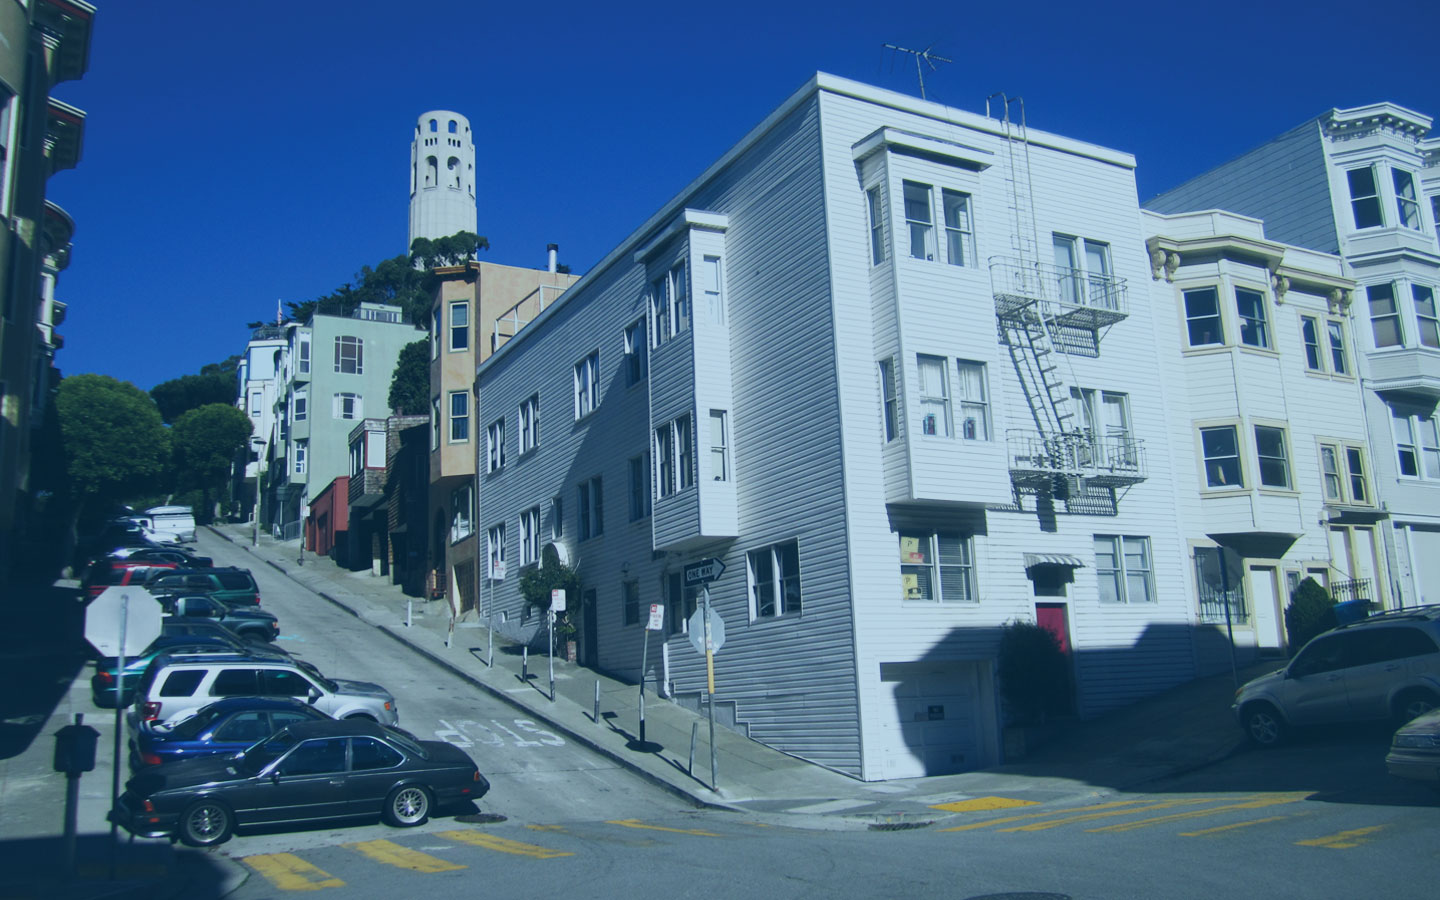 Housing in San Francisco